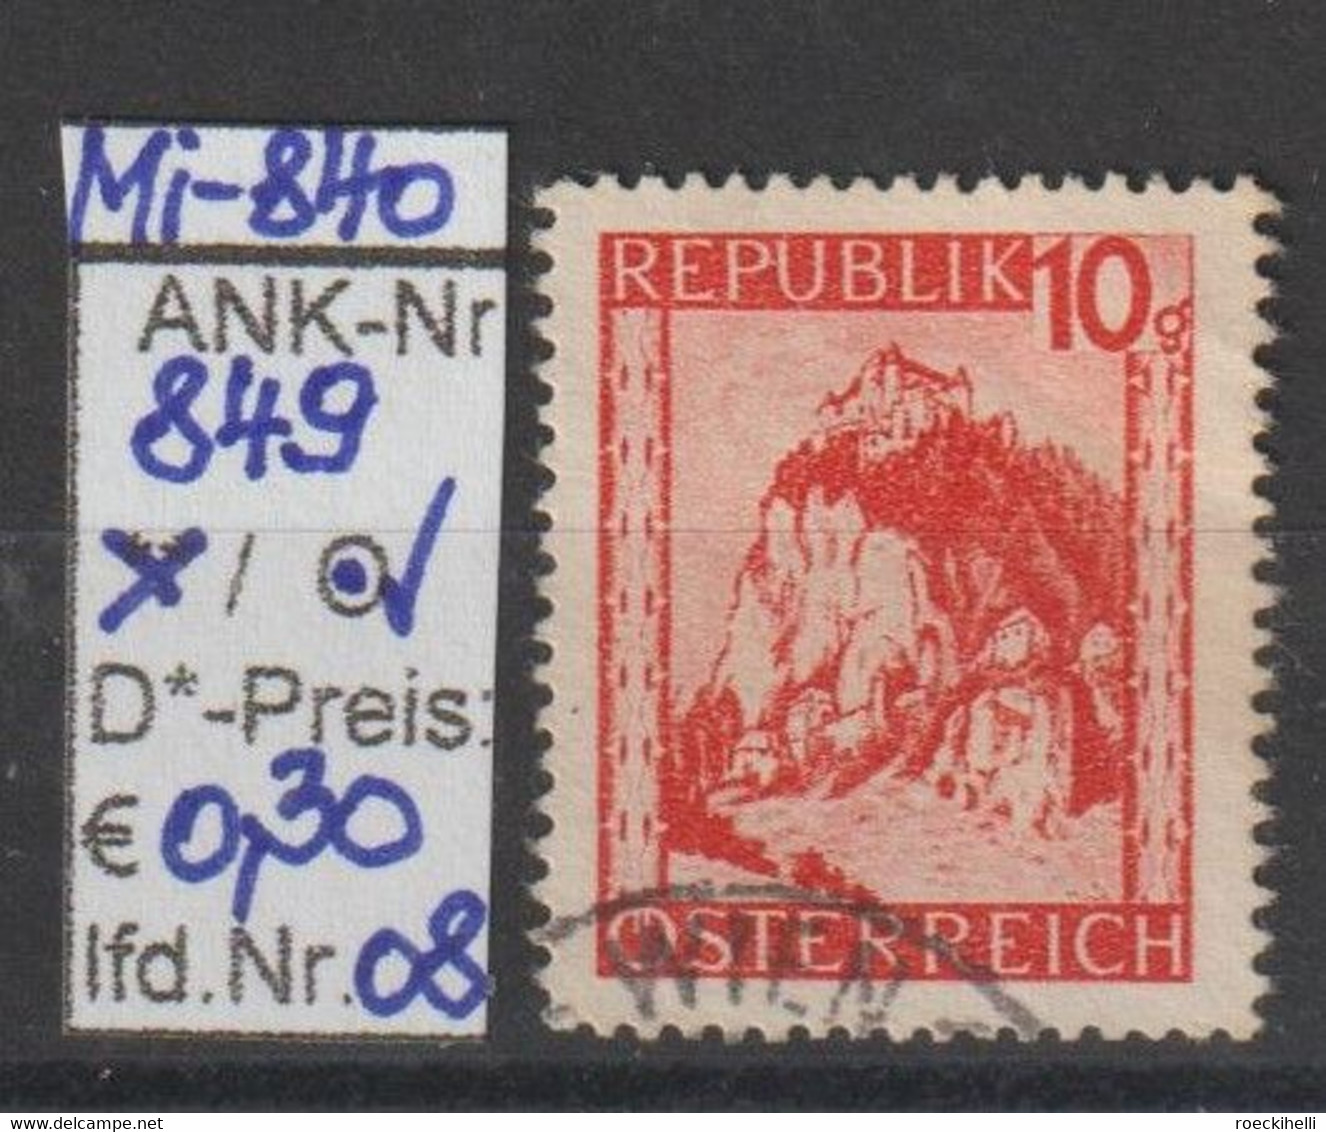 1947 - ÖSTERREICH - FM/DM "Landschaften" - 10g orange - o  gestempelt - s. Scan  (849o 01-10   at)